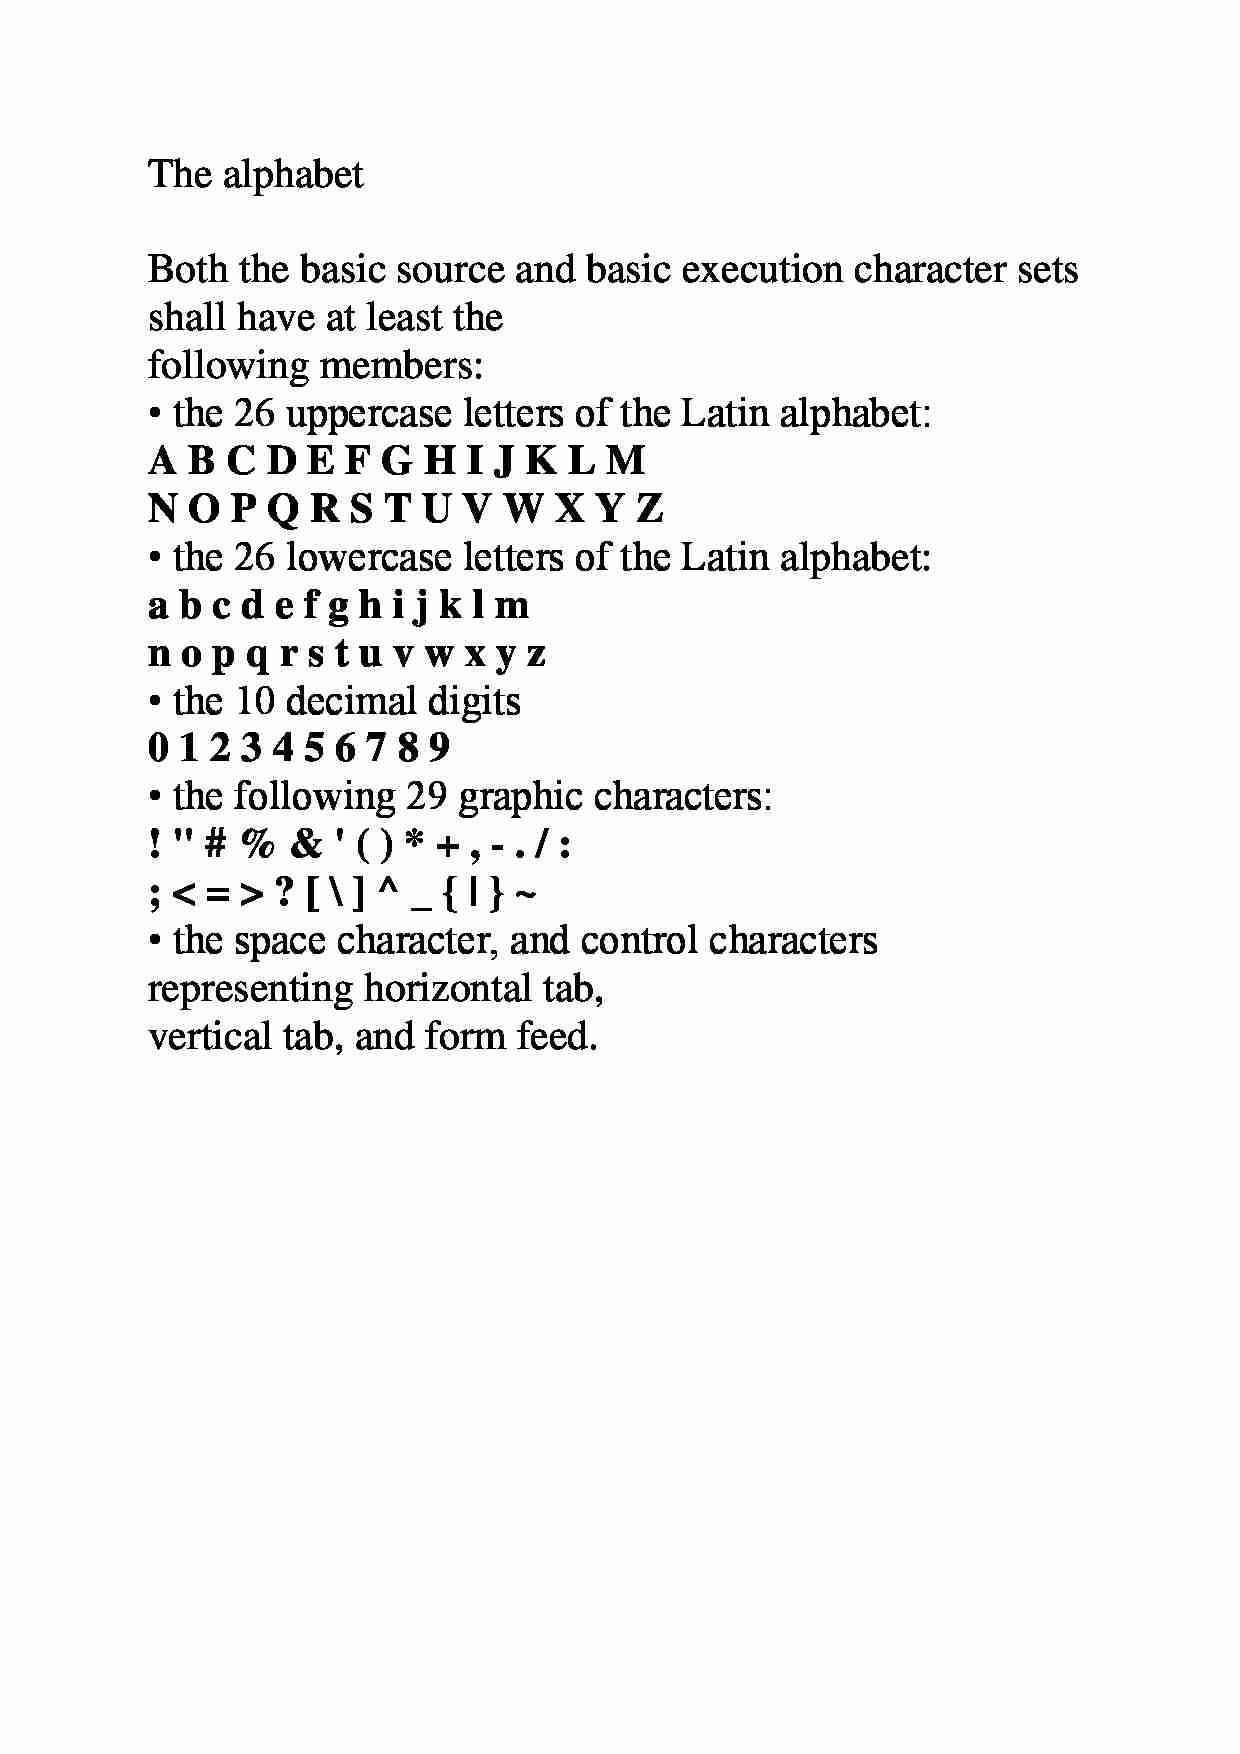 The alphabet  - overview - strona 1